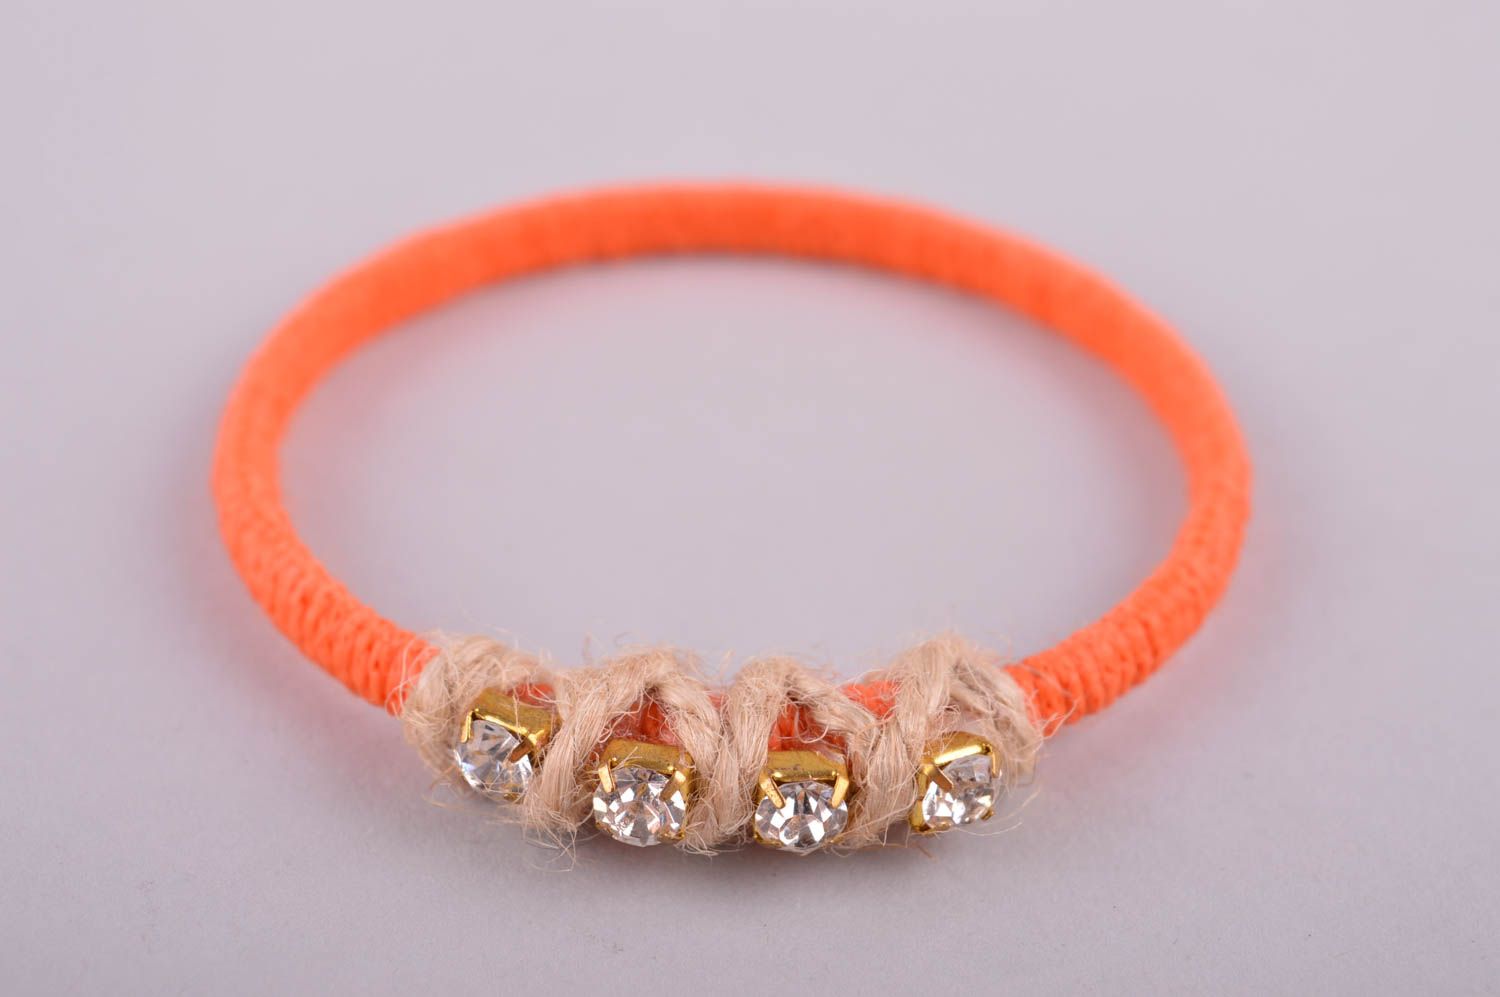 Handmade bracelet wrist bracelet designer accessories for girls gifts for her photo 3